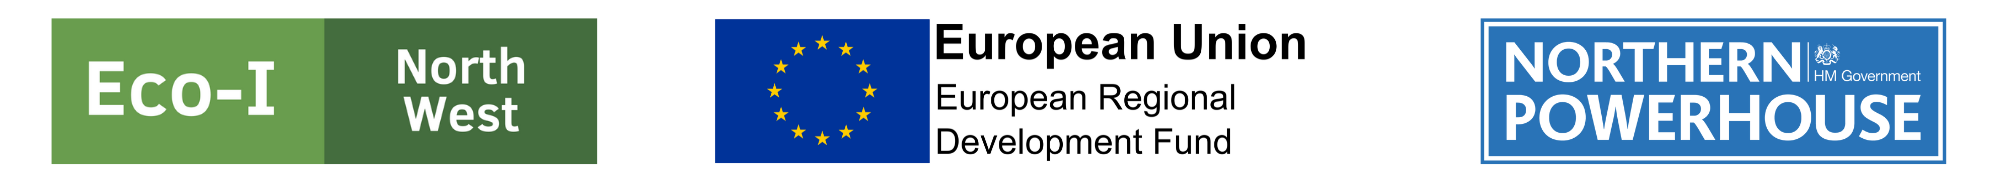 Eco-I NW partner logos which include: European Regional Development Fund, Northern Powerhouse